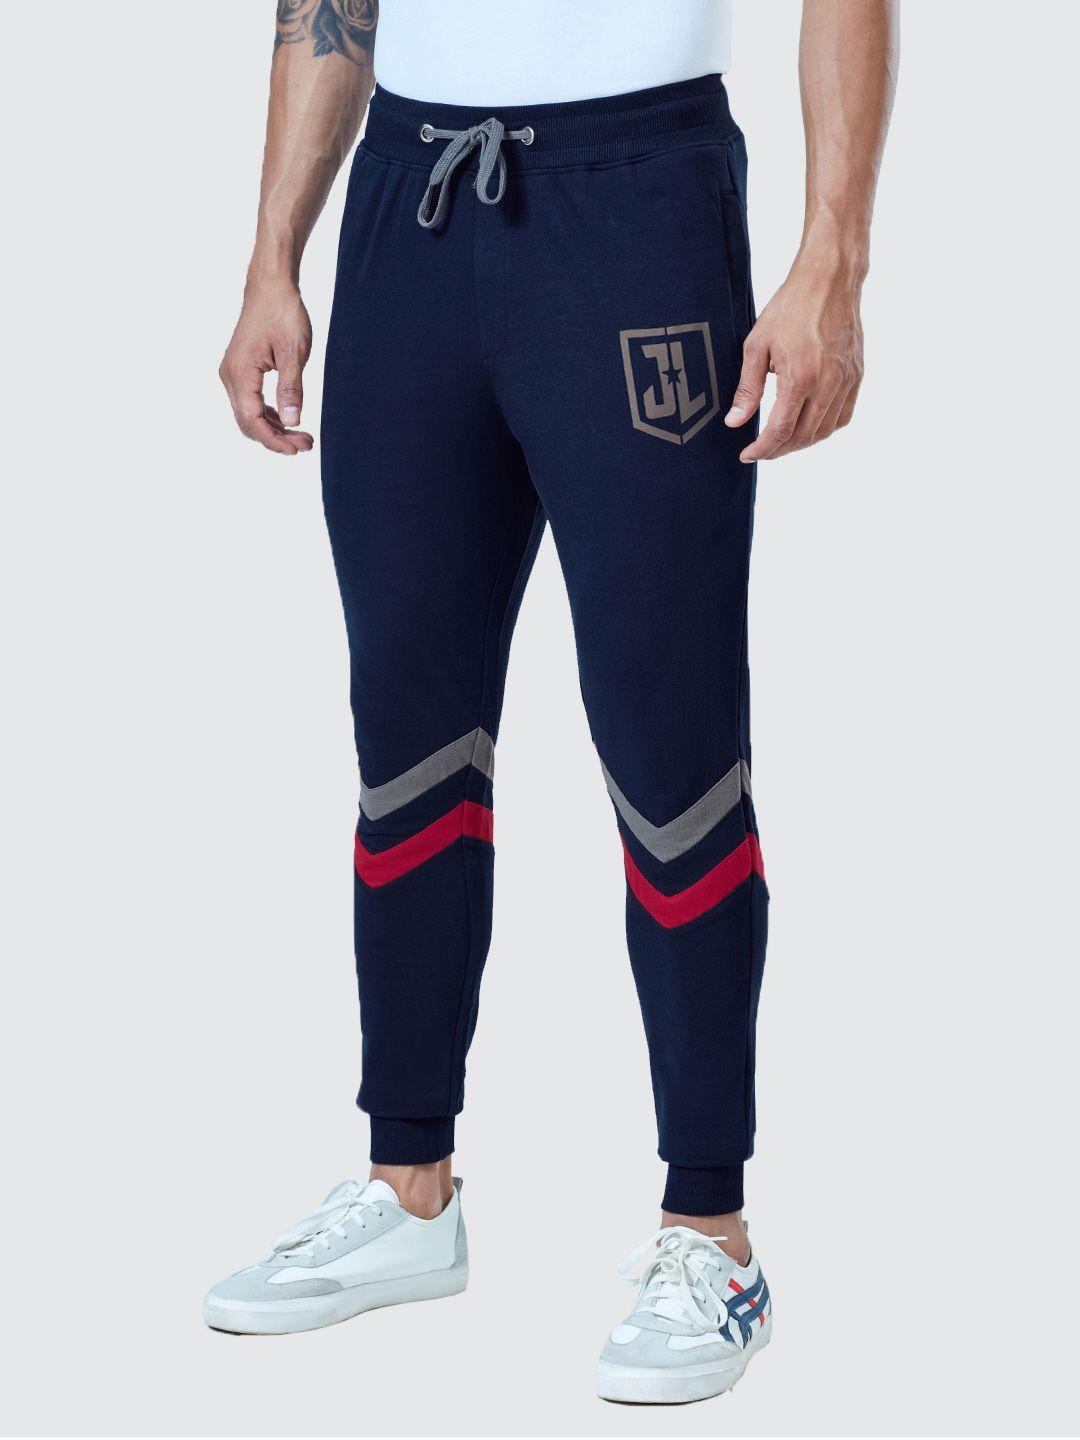 the souled store men navy blue justice league logo print cotton track pants